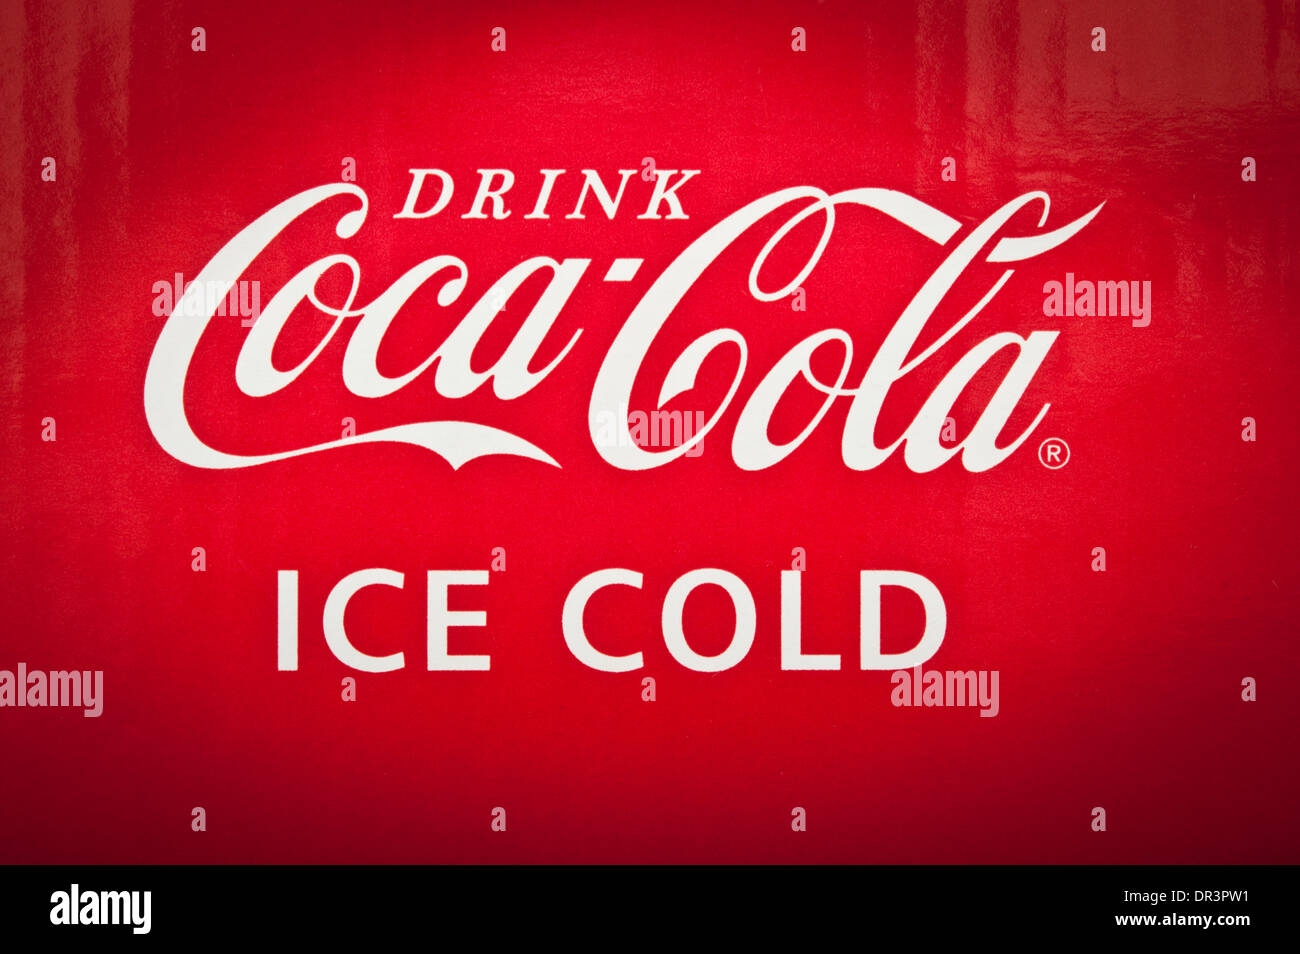 vintage Coca Cola advertising sign Stock Photo